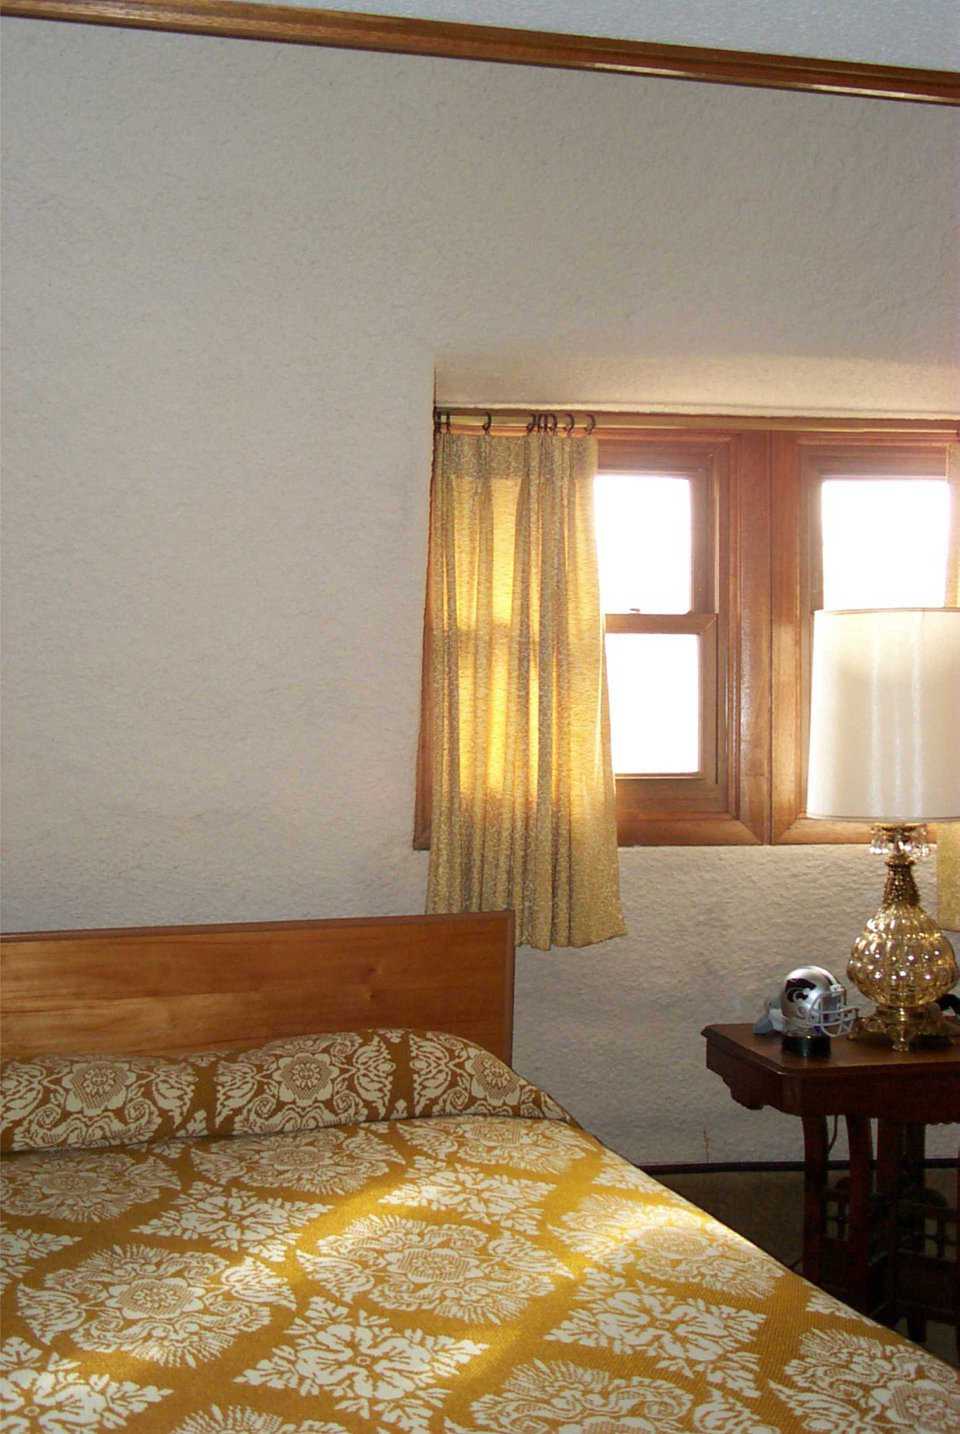 Bedroom — Warm winter sunlight enters the spacious bedroom through wood framed windows.